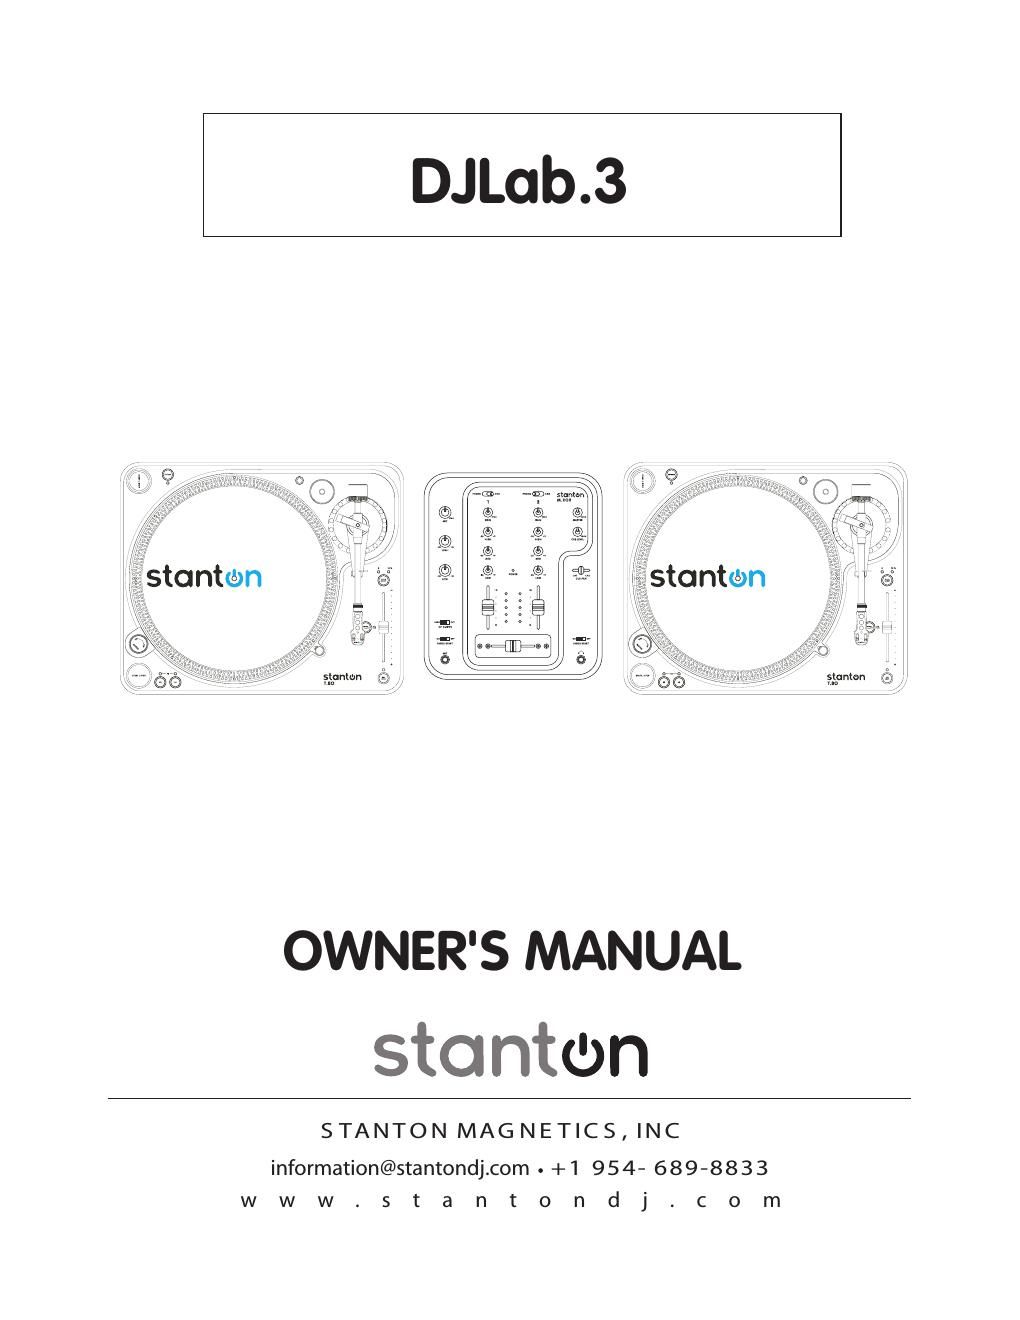 stanton djlab 3 owners manual